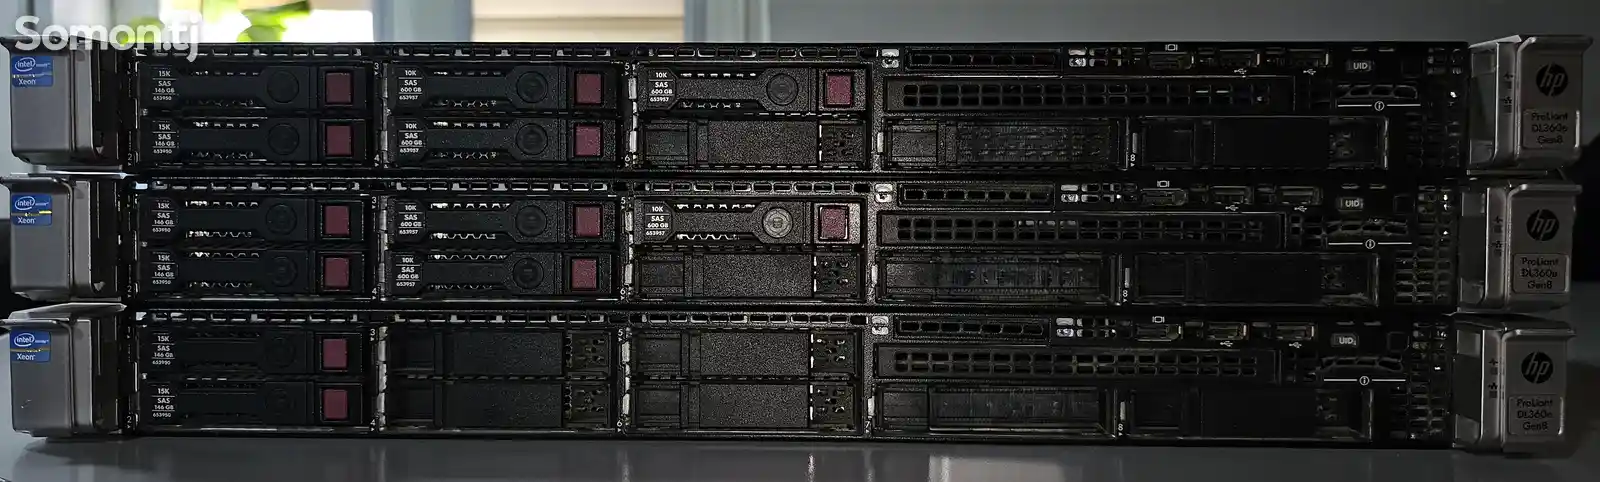 Сервер HP DL360e Gen8 Server 3 ProLiant-2